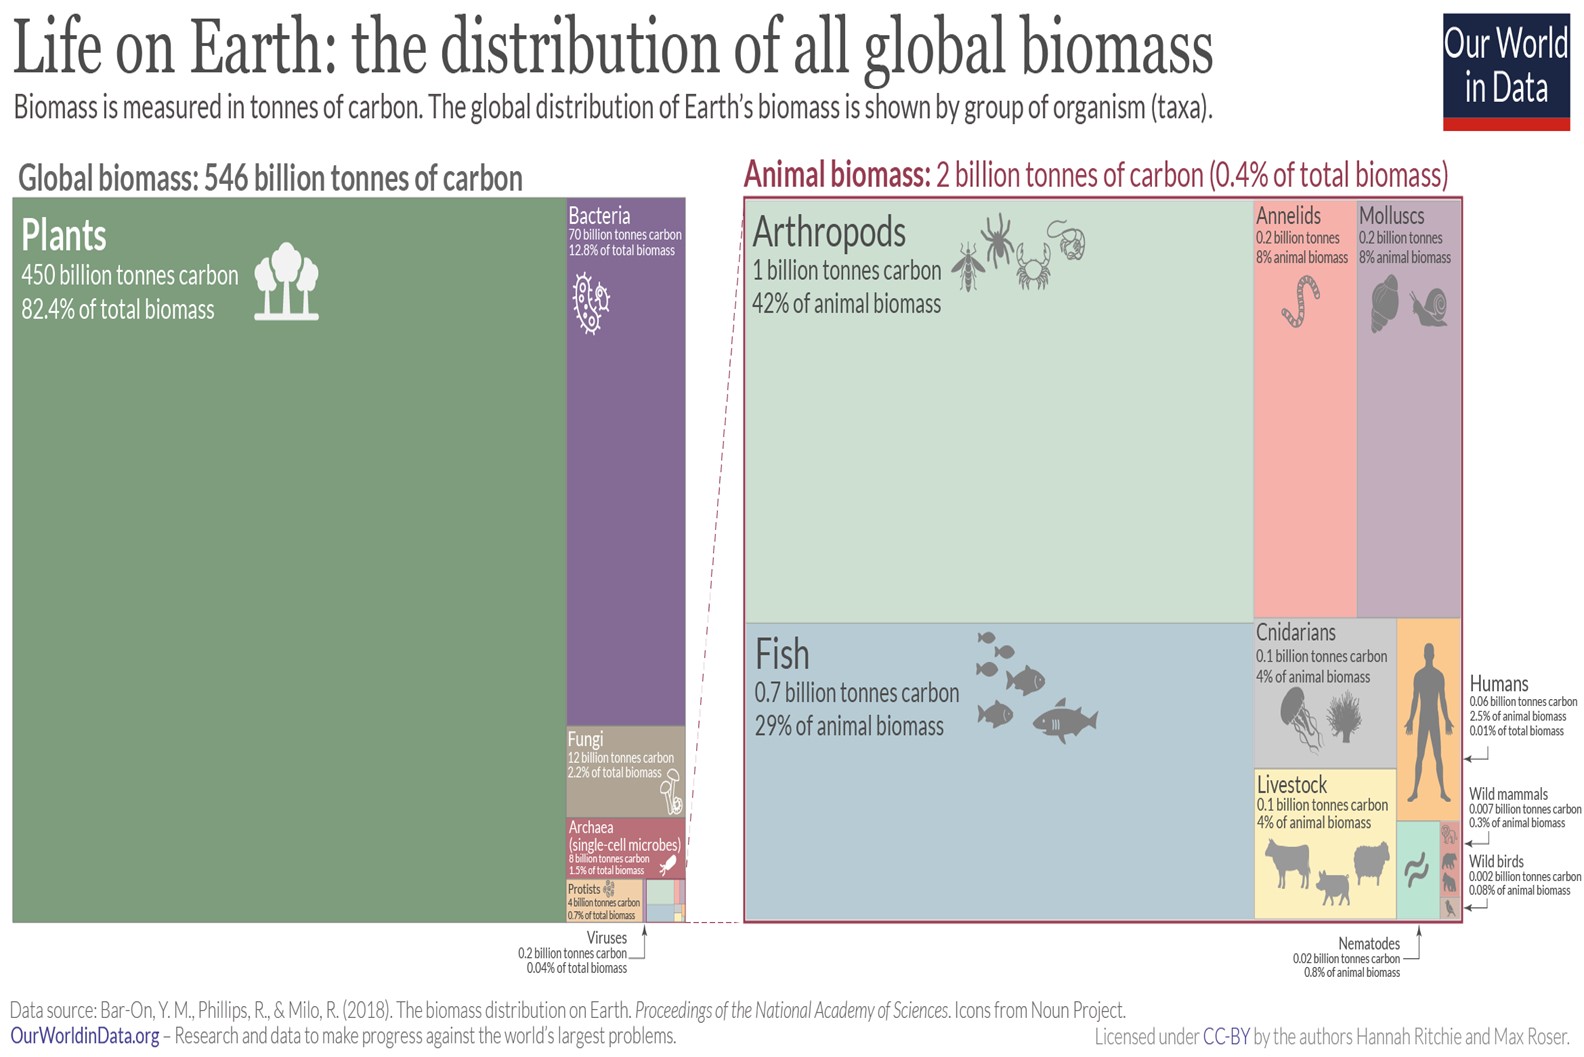 Global biomass vs. Animal biomass